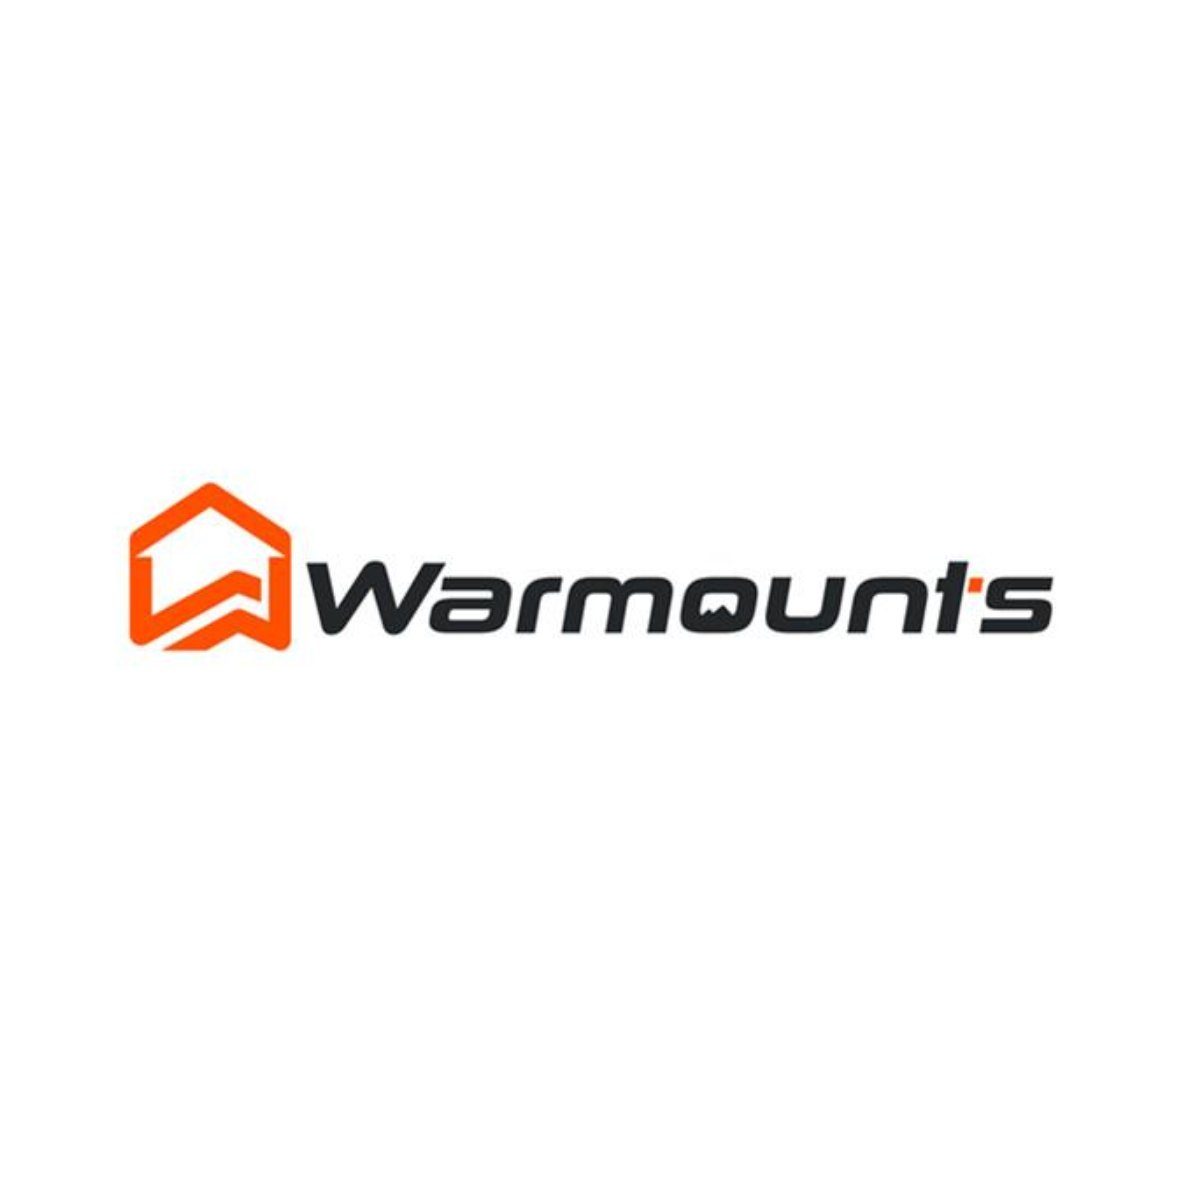 Warmounts